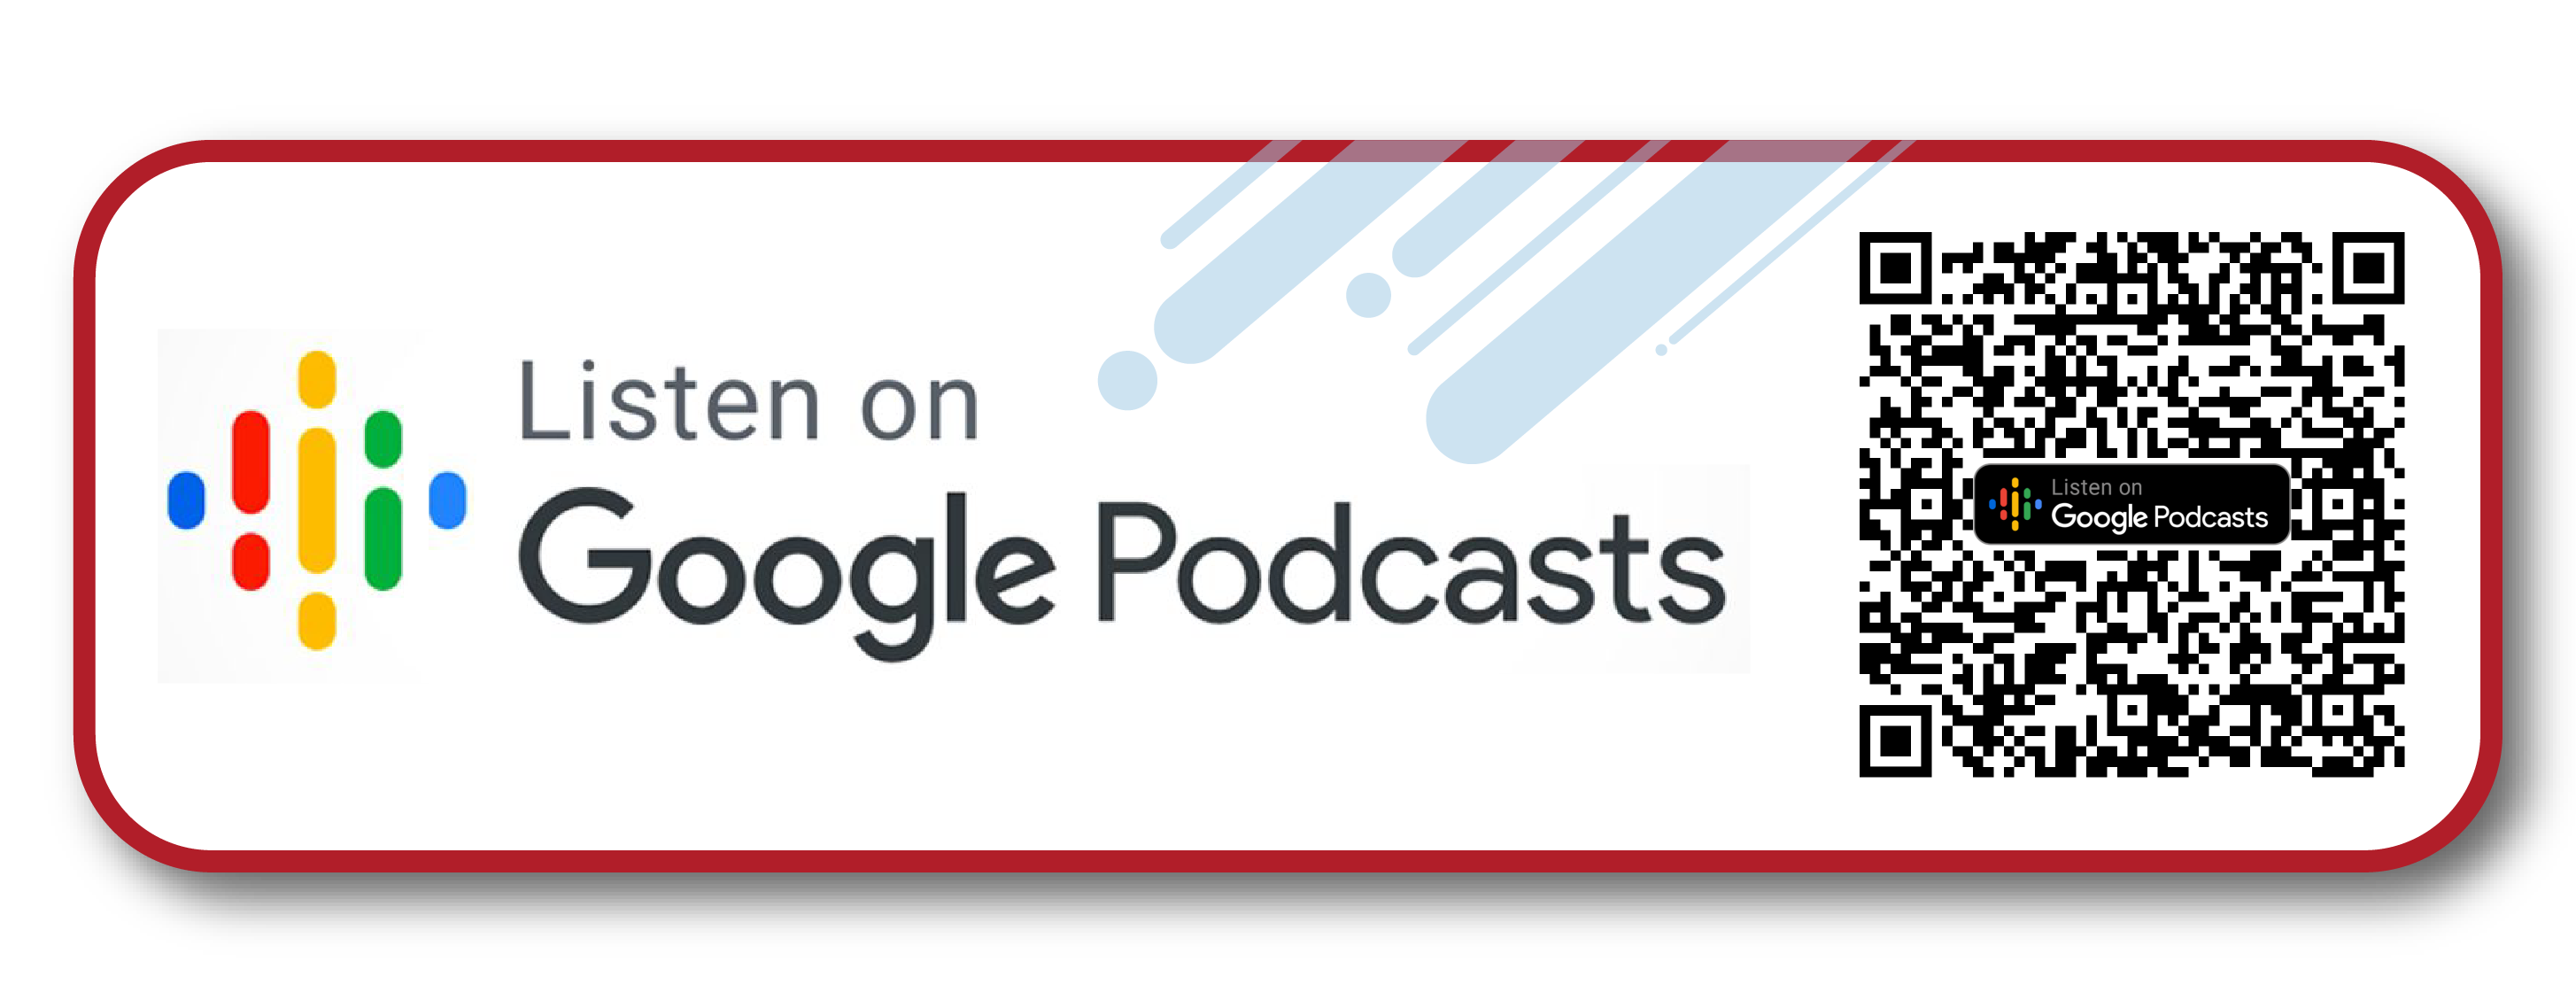 Google_Podcasts_BT